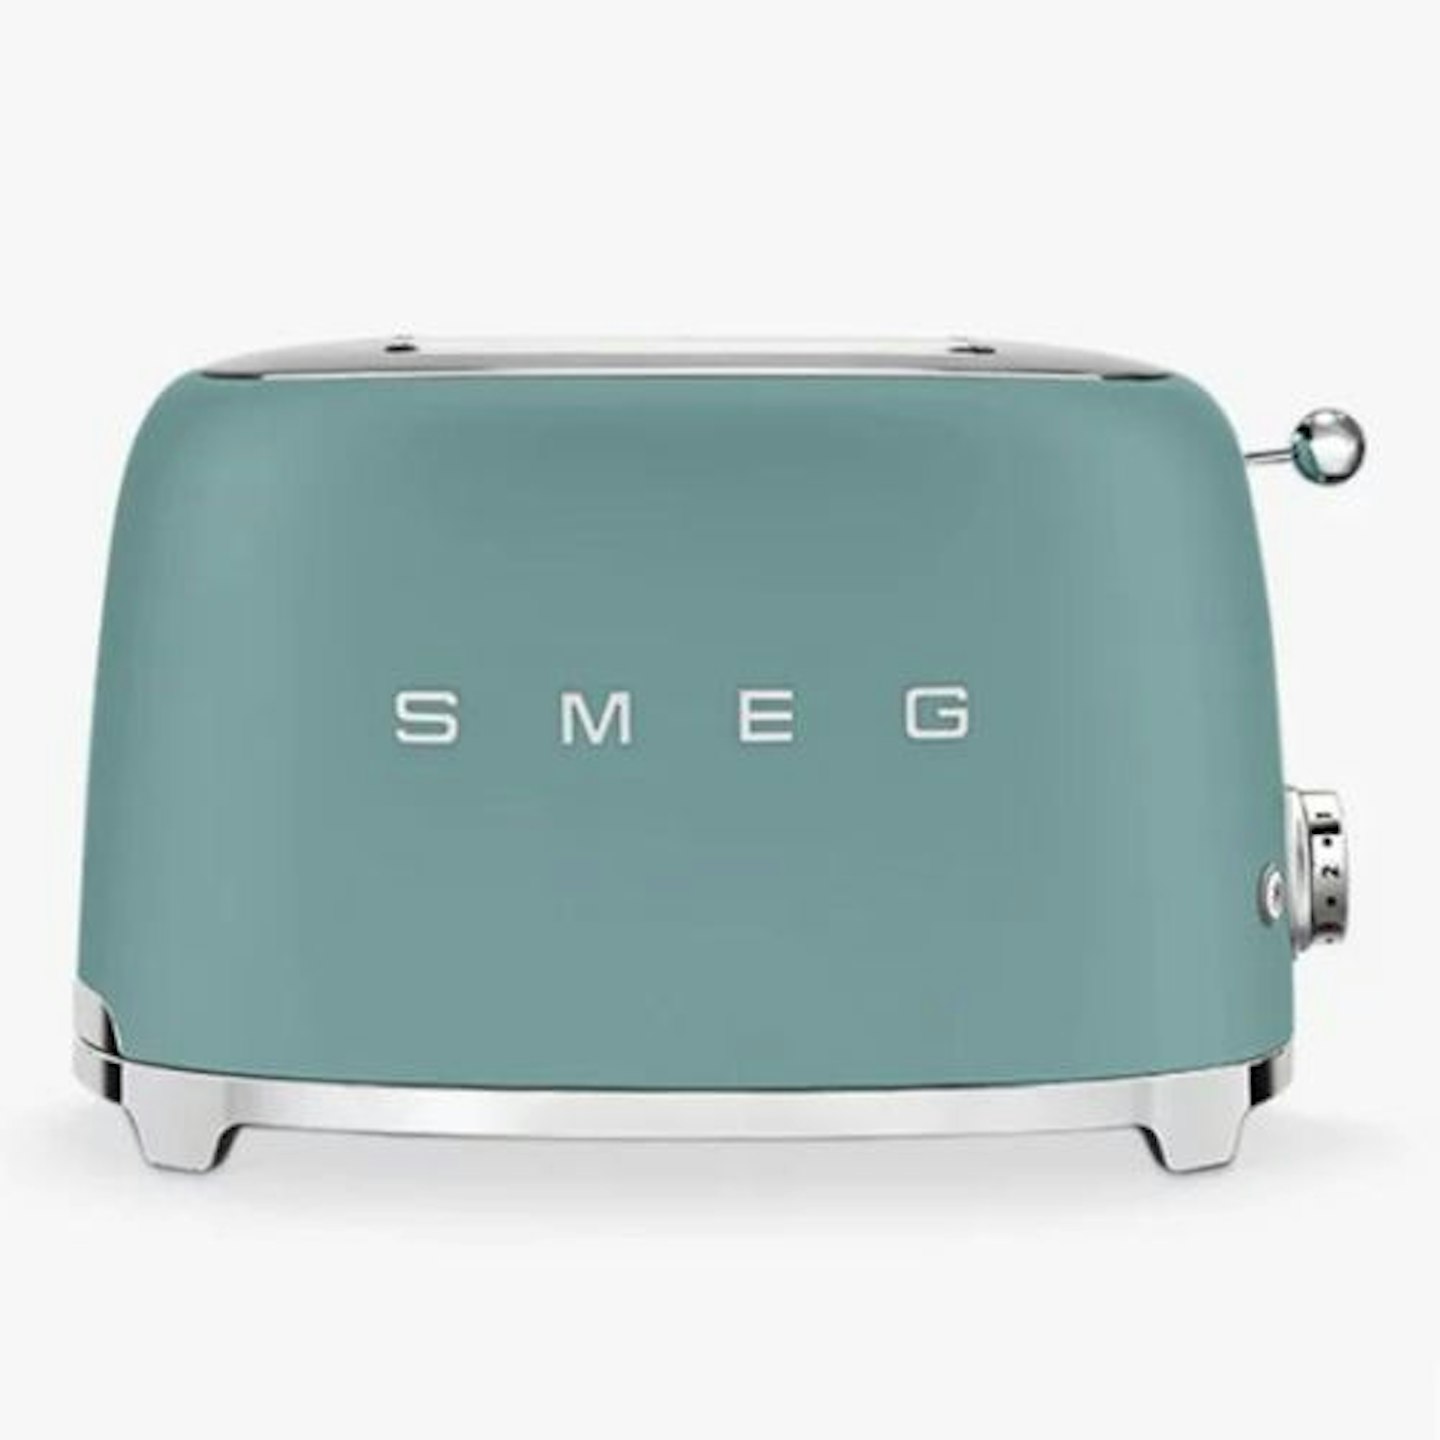 Smeg TSF01 2-Slice Toaster, Emerald Green